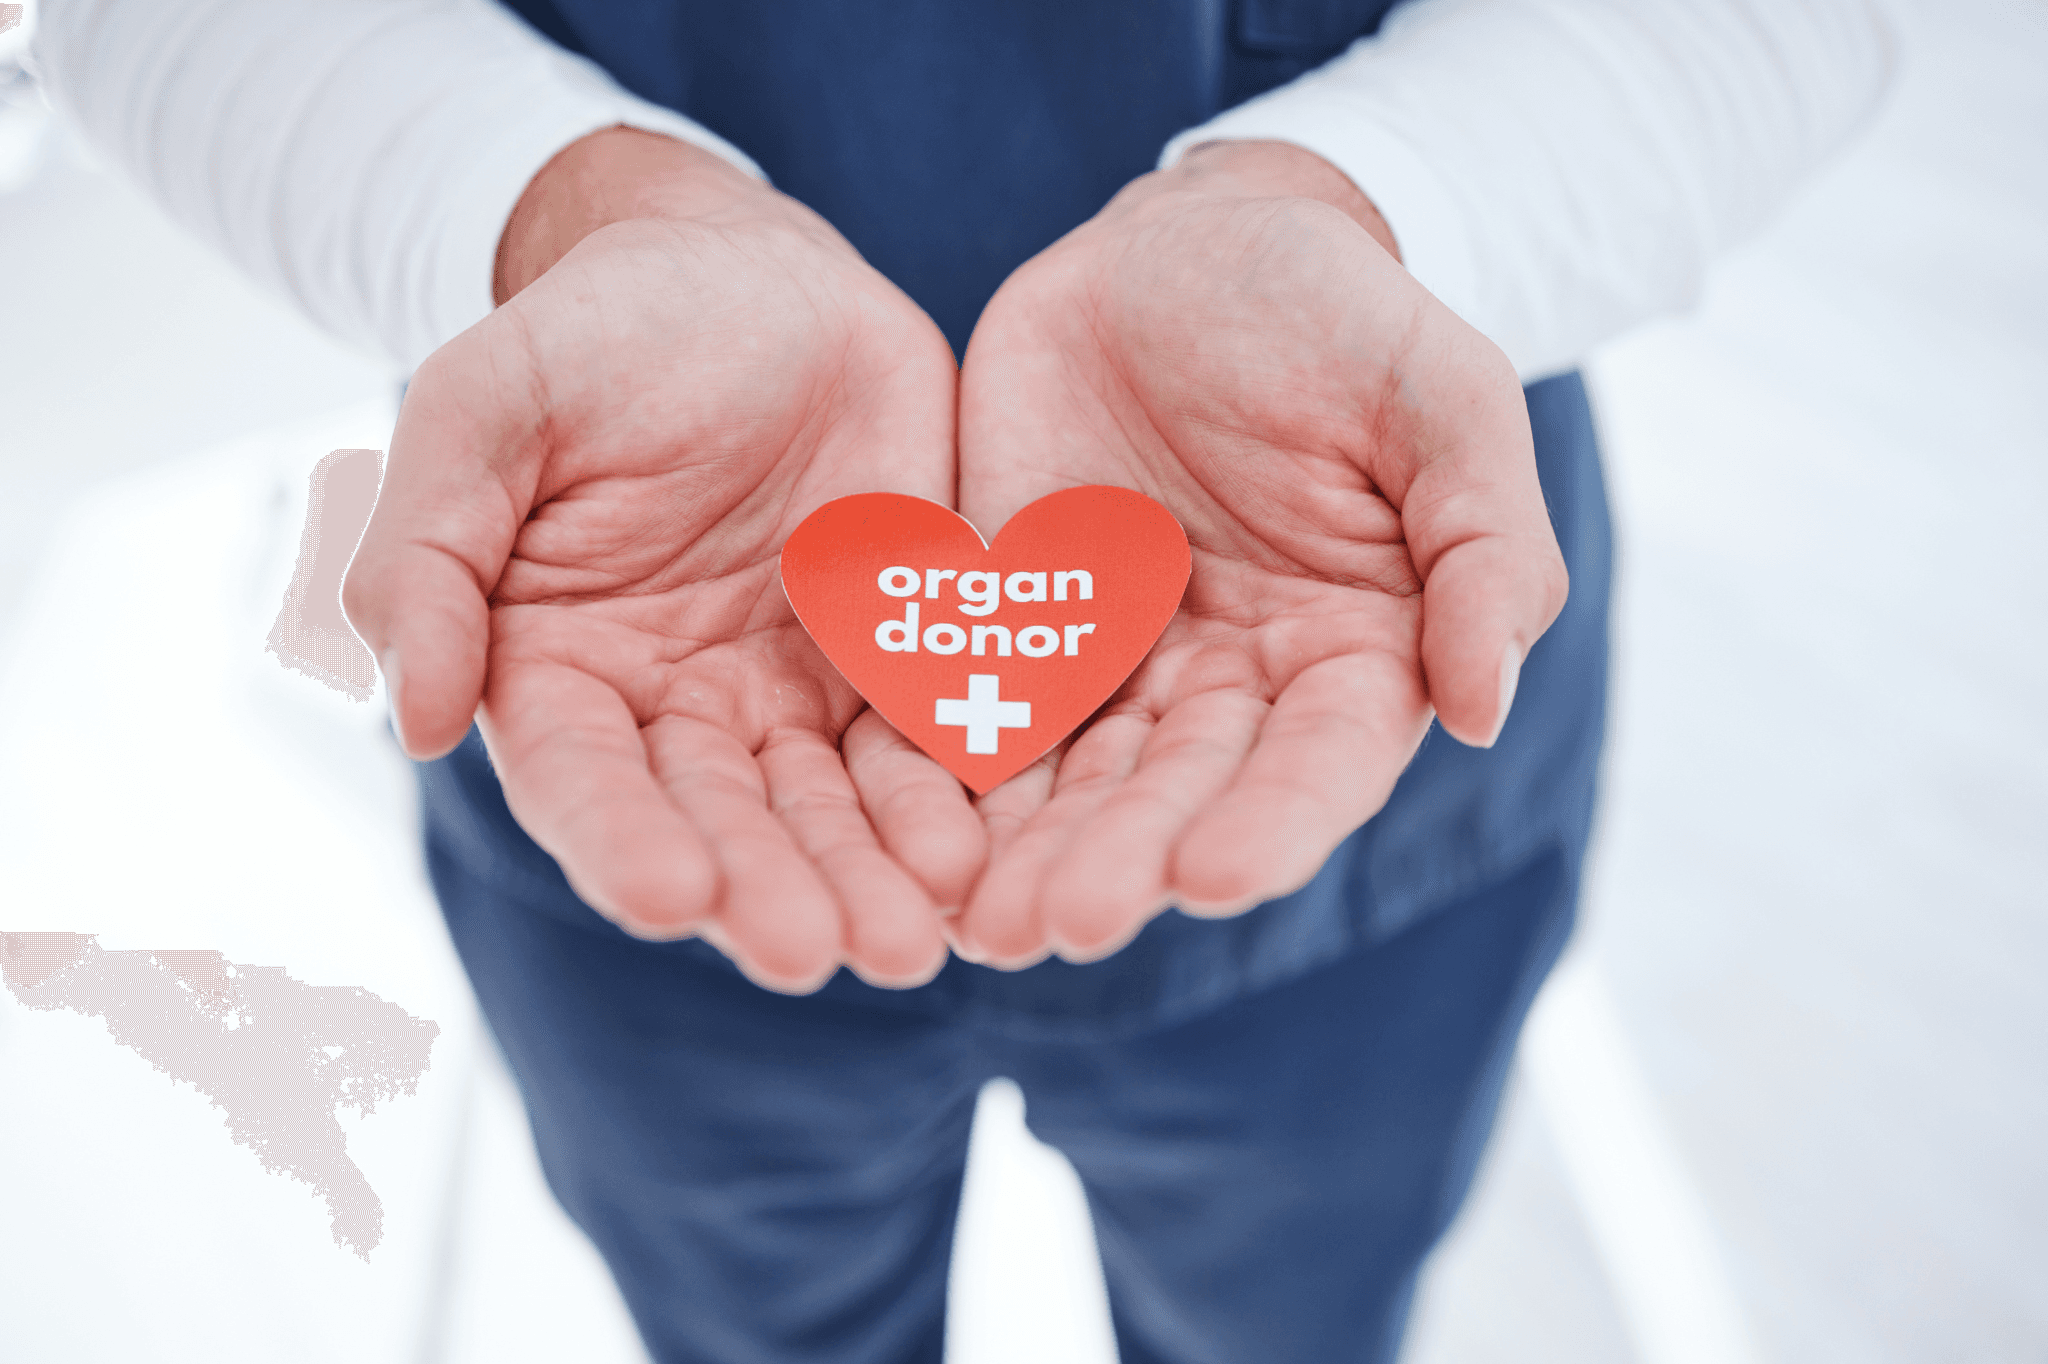 uae, Dubai, healthcare, organ donation, transplant, medical